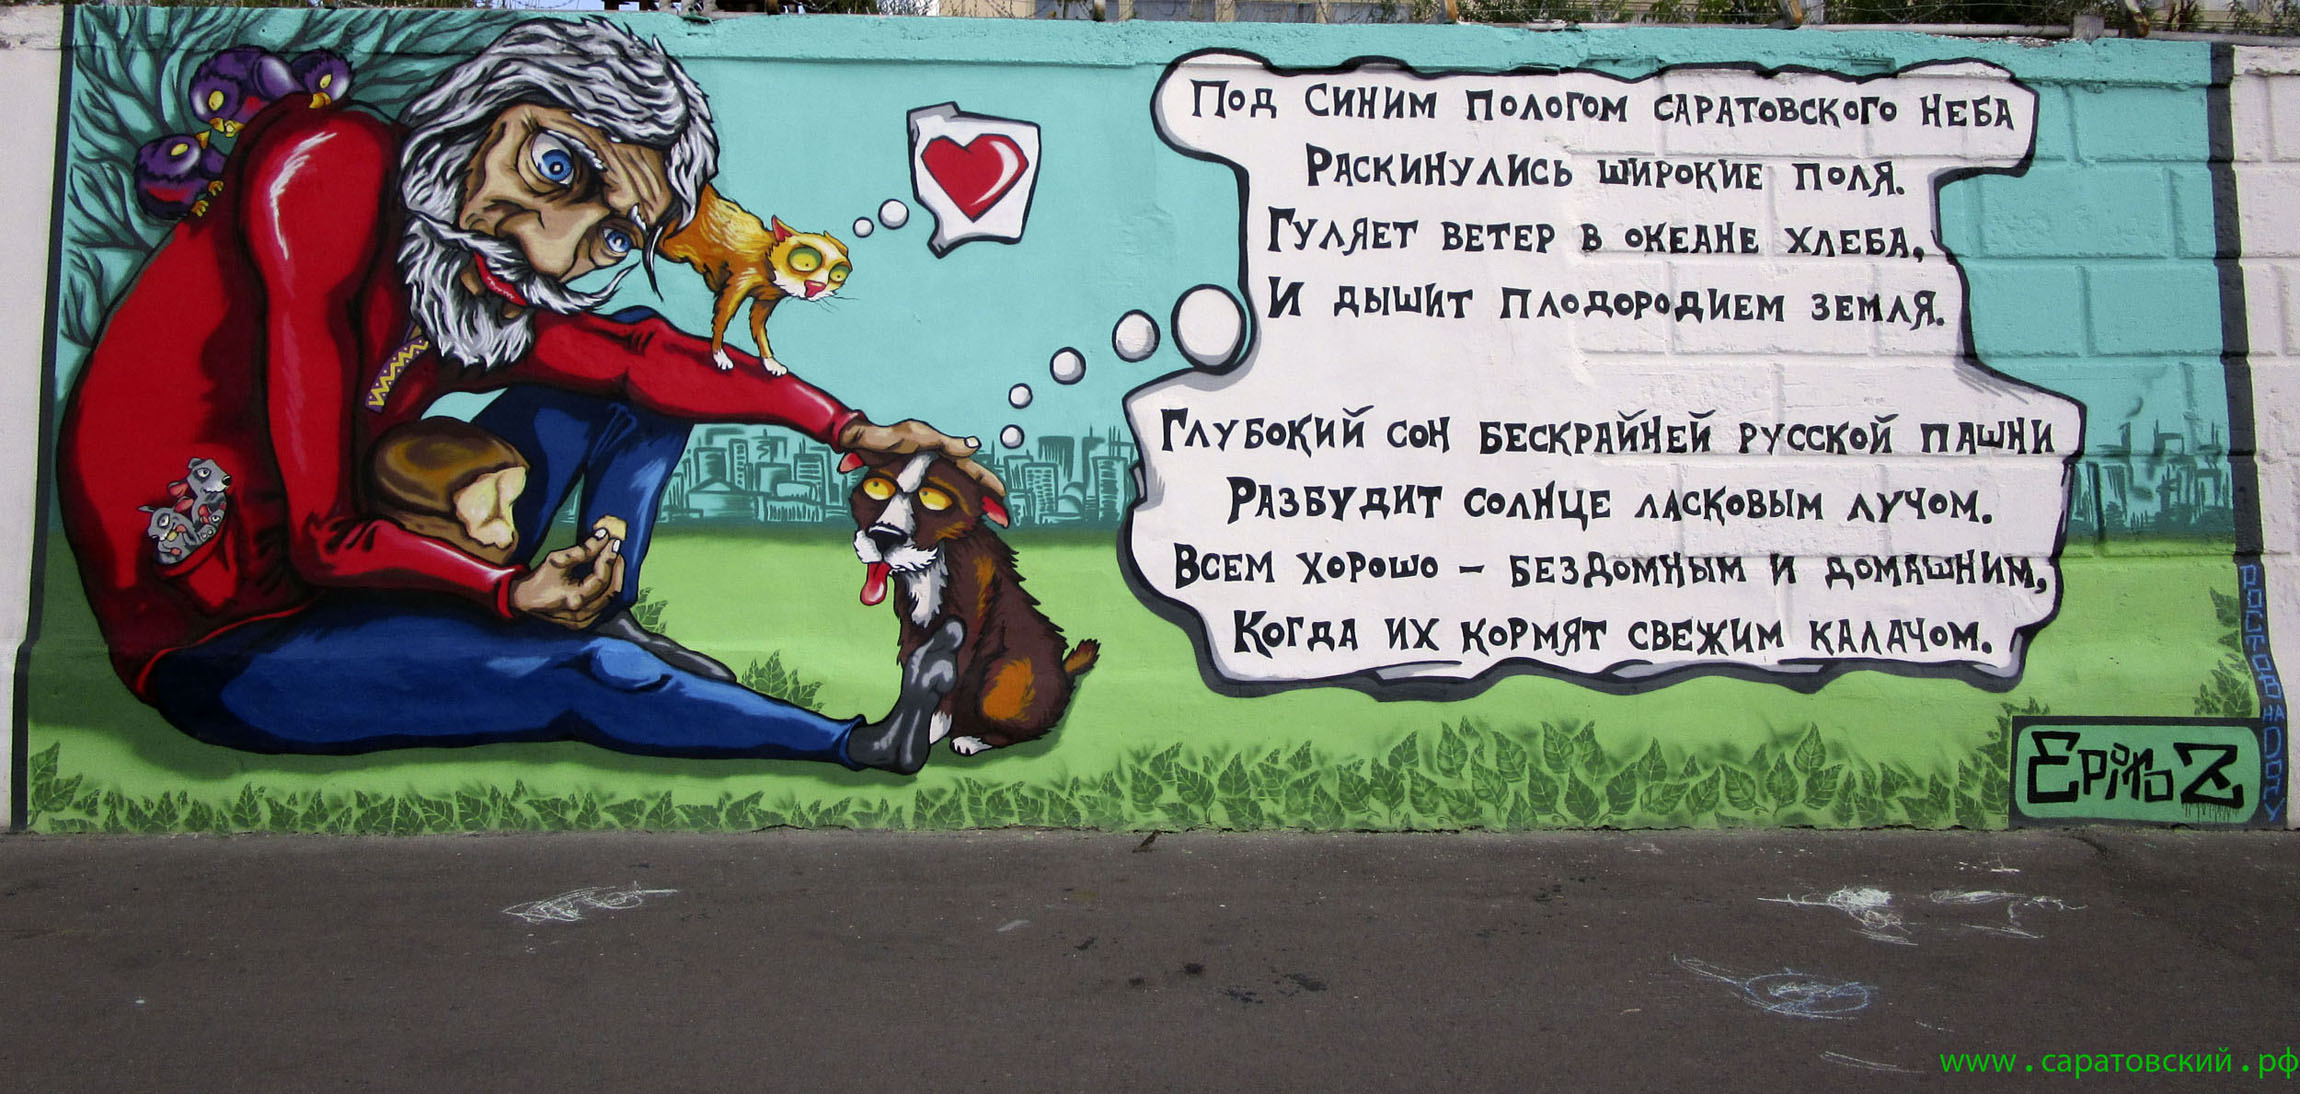 Saratov waterfront graffiti: Saratovsky kalach, Russia